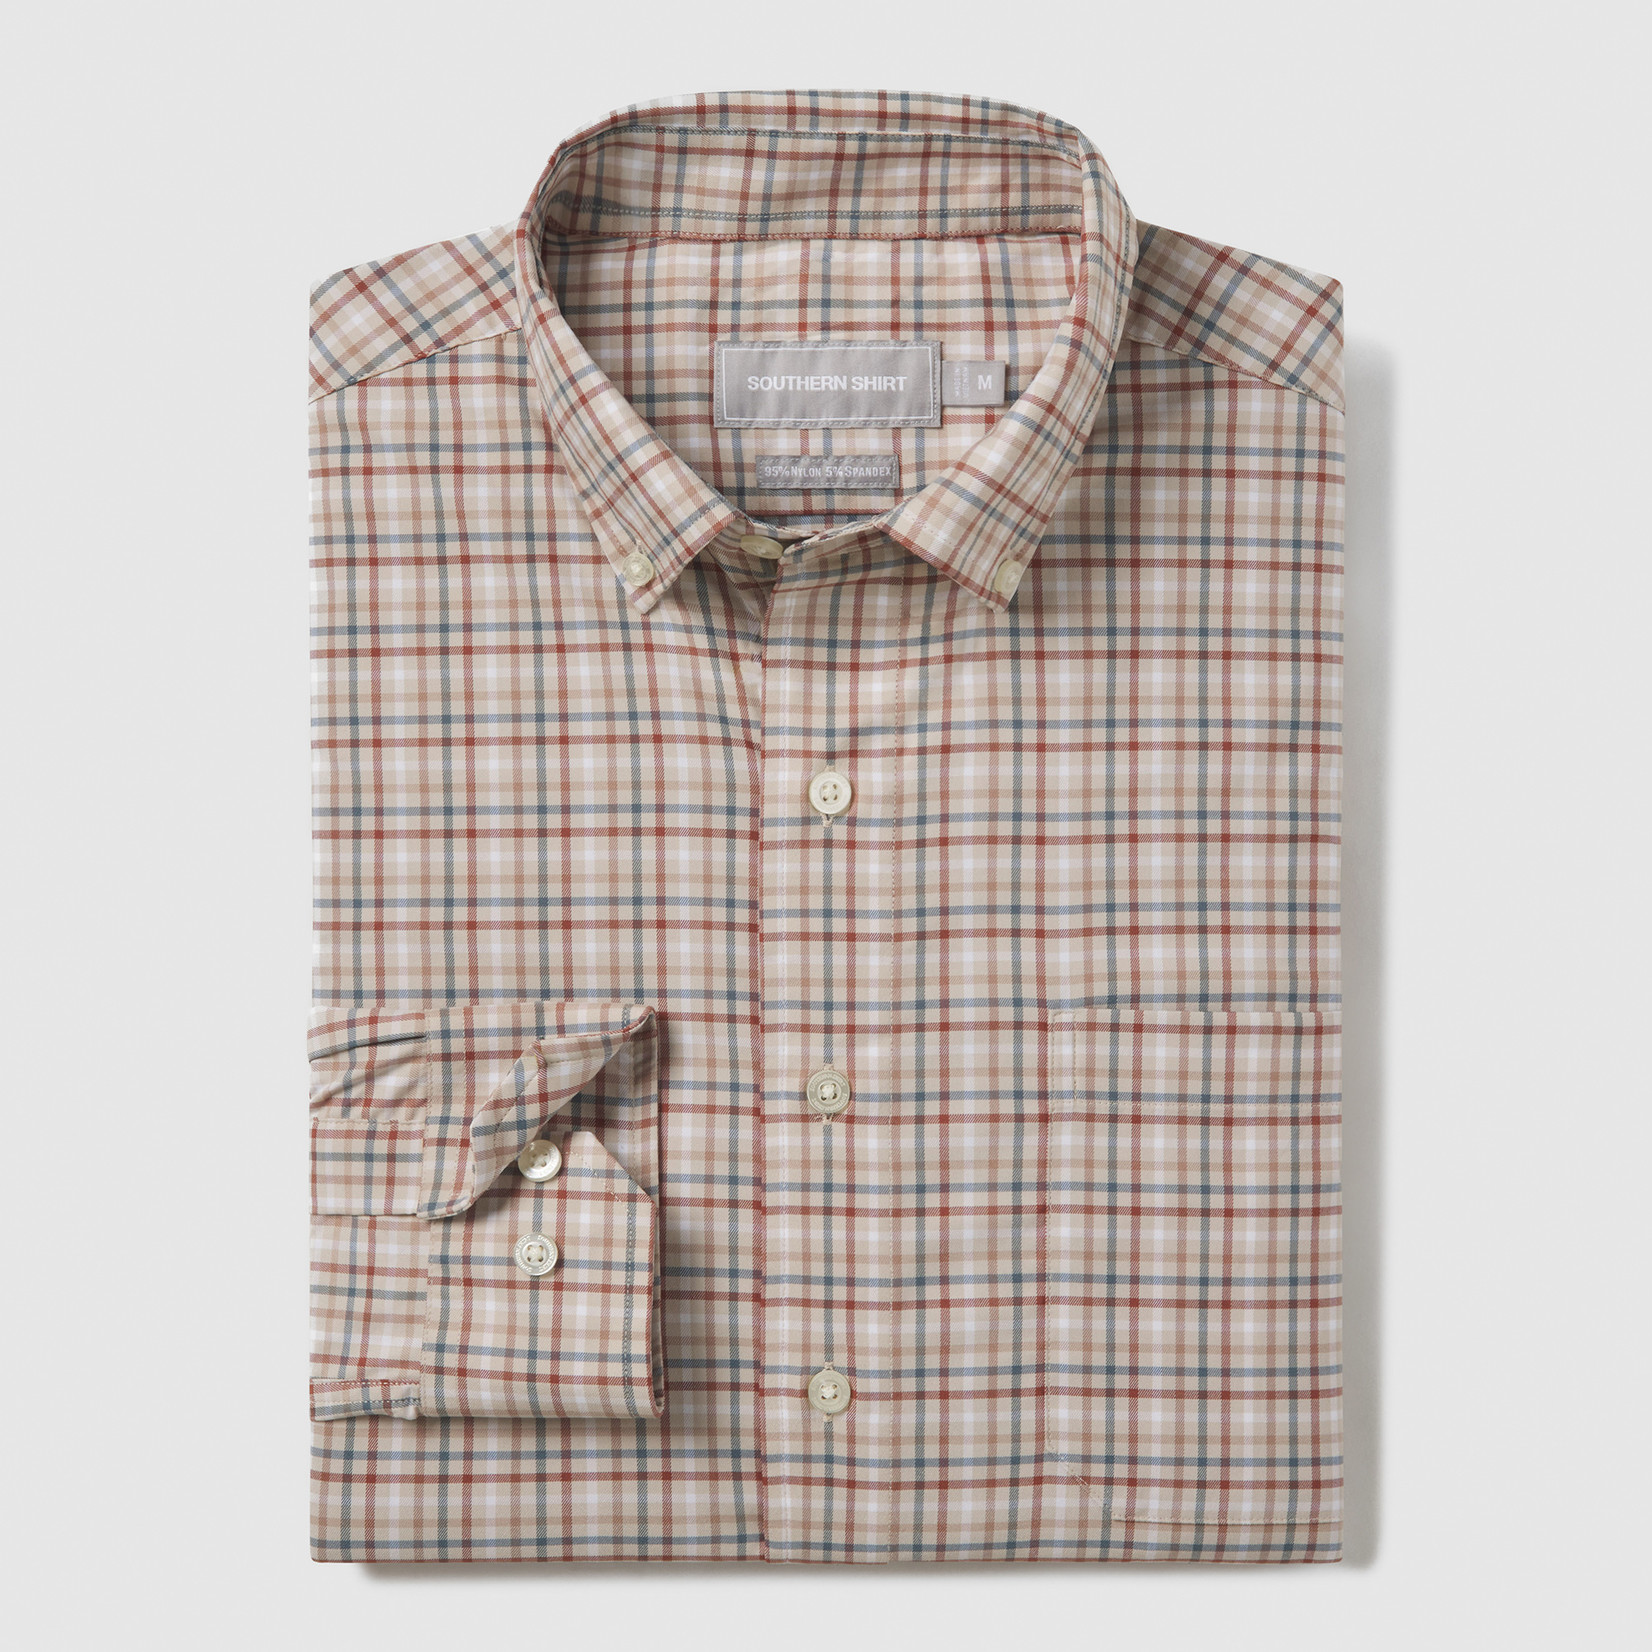 Southern Shirt Samford Check Long Sleeved Button Down